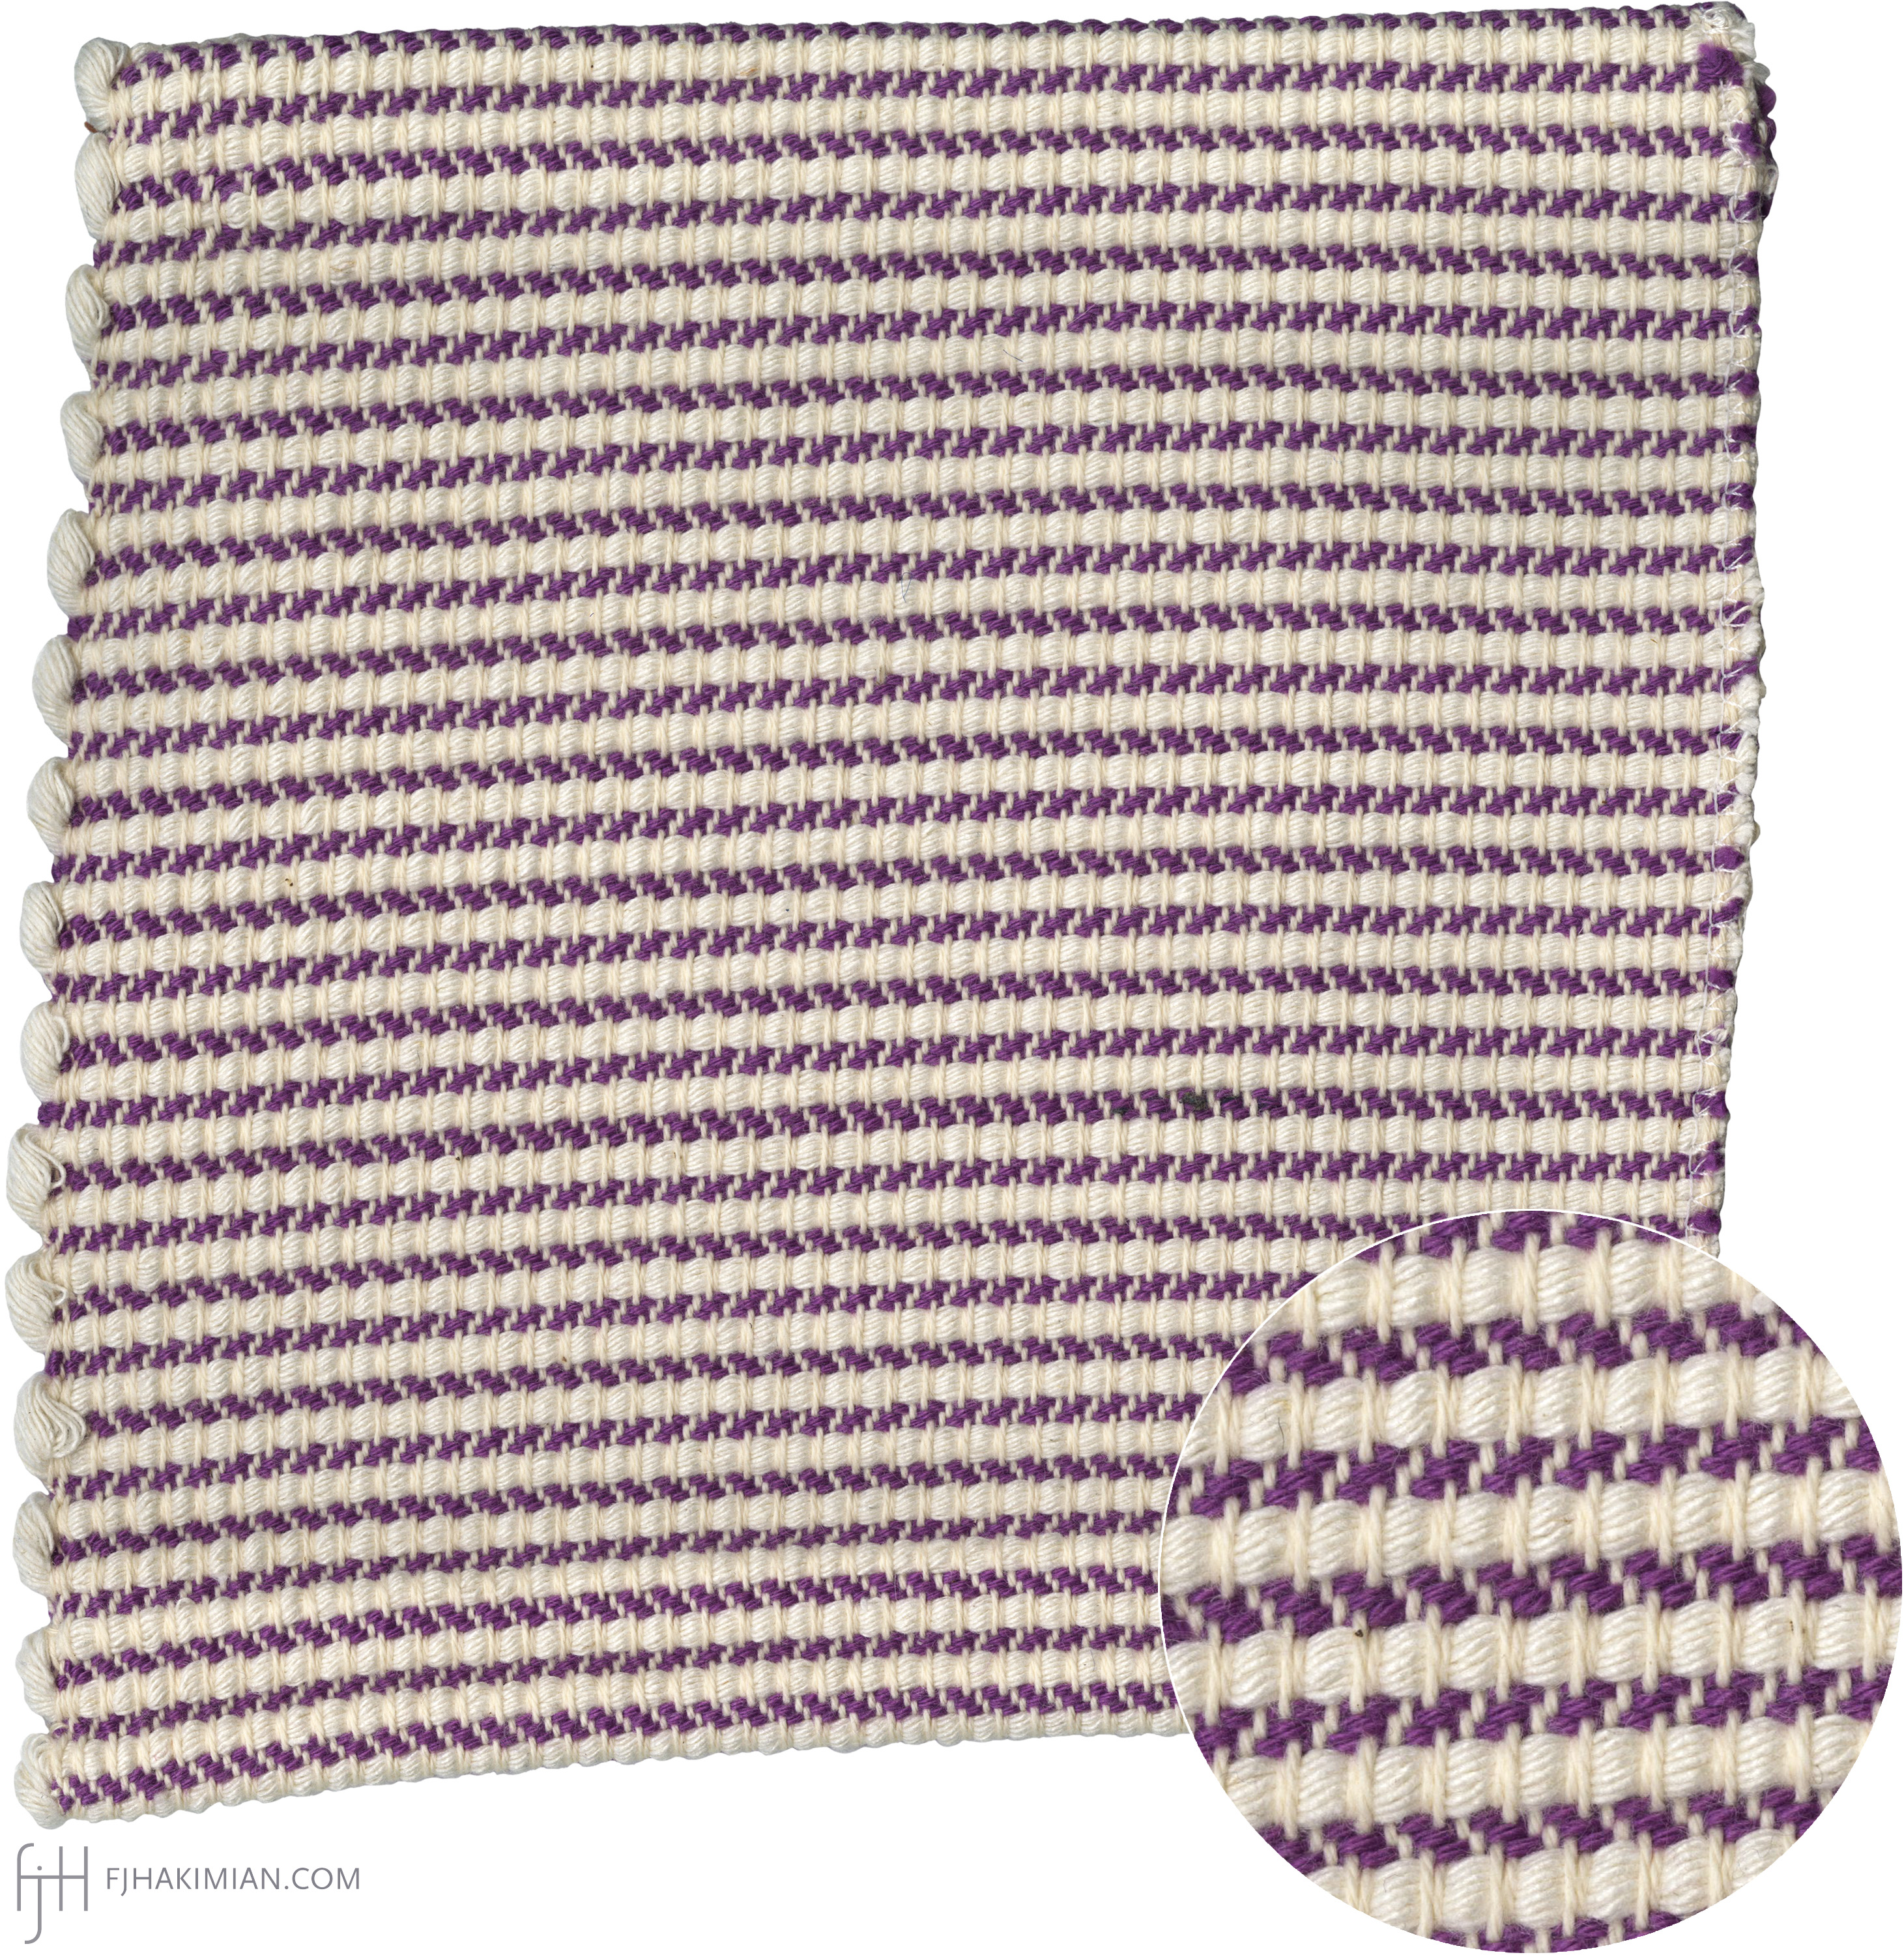 IF-Sardinian Purple Design | Custom Sardinian Carpet | FJ Hakimian | Carpet Gallery in NYC